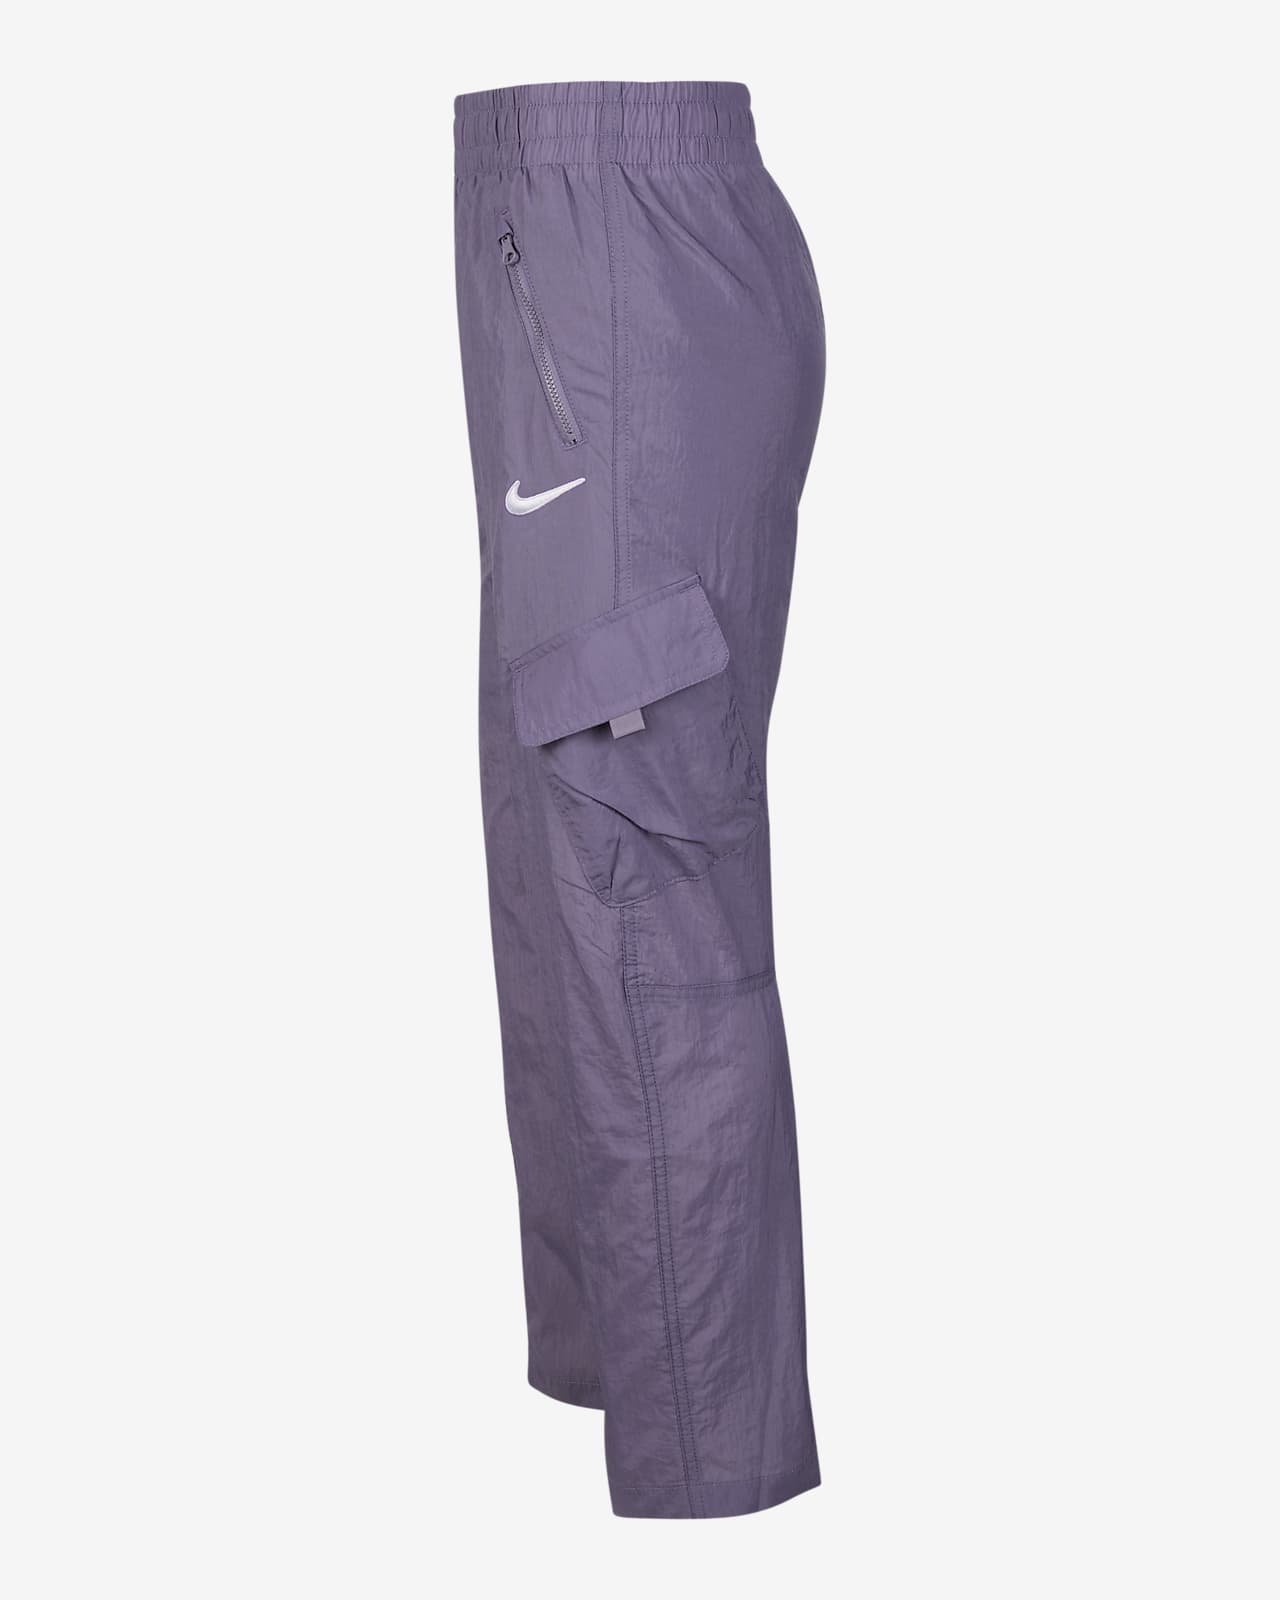 Nike Sportswear Heritage Big Kids Girls Woven Track Pants Black Purple  Large NWT